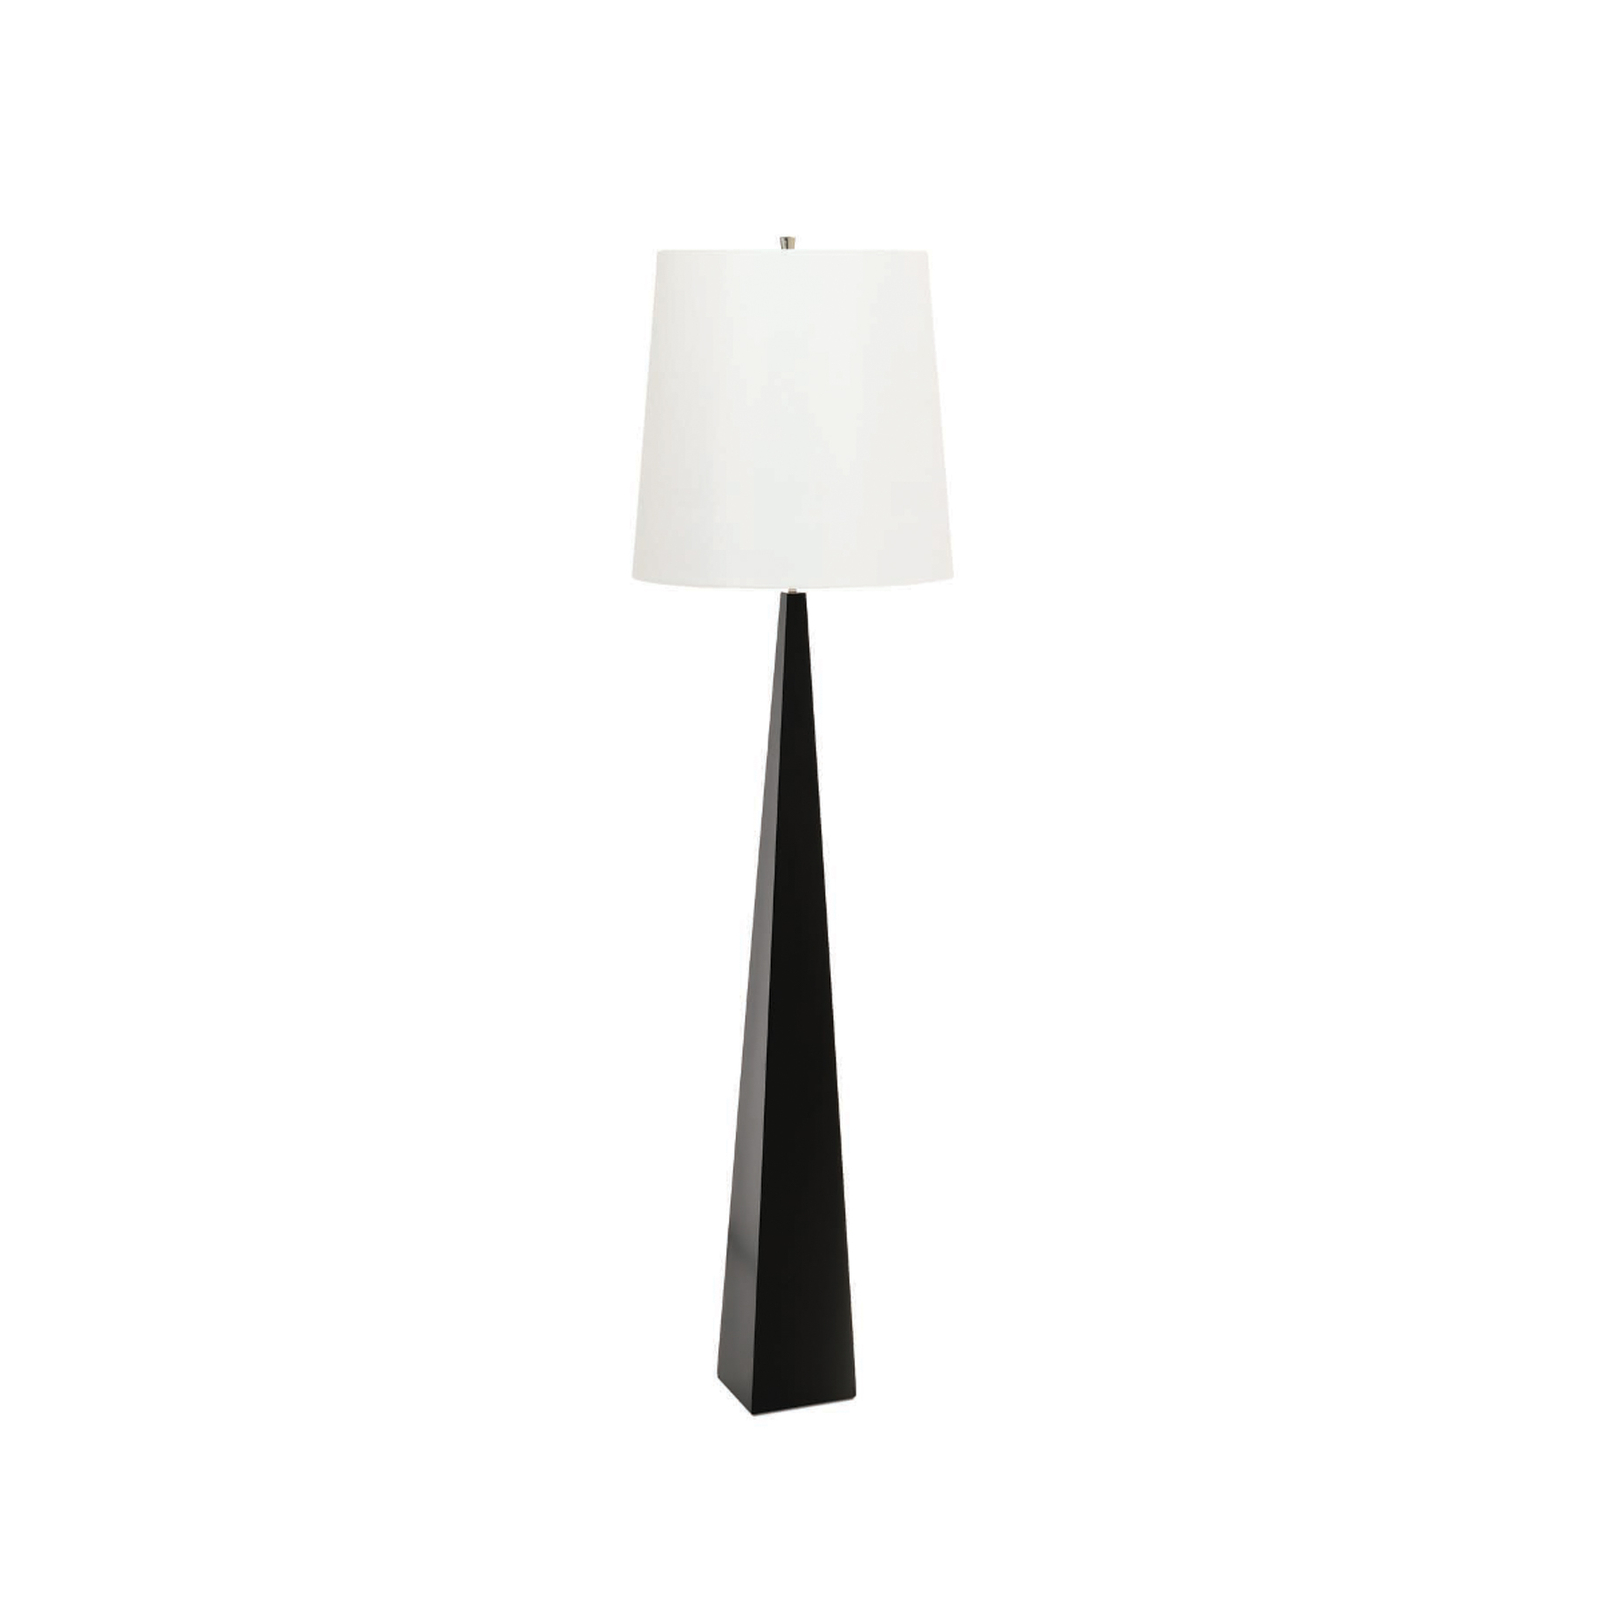 Ascent floor lamp, black, white lampshade